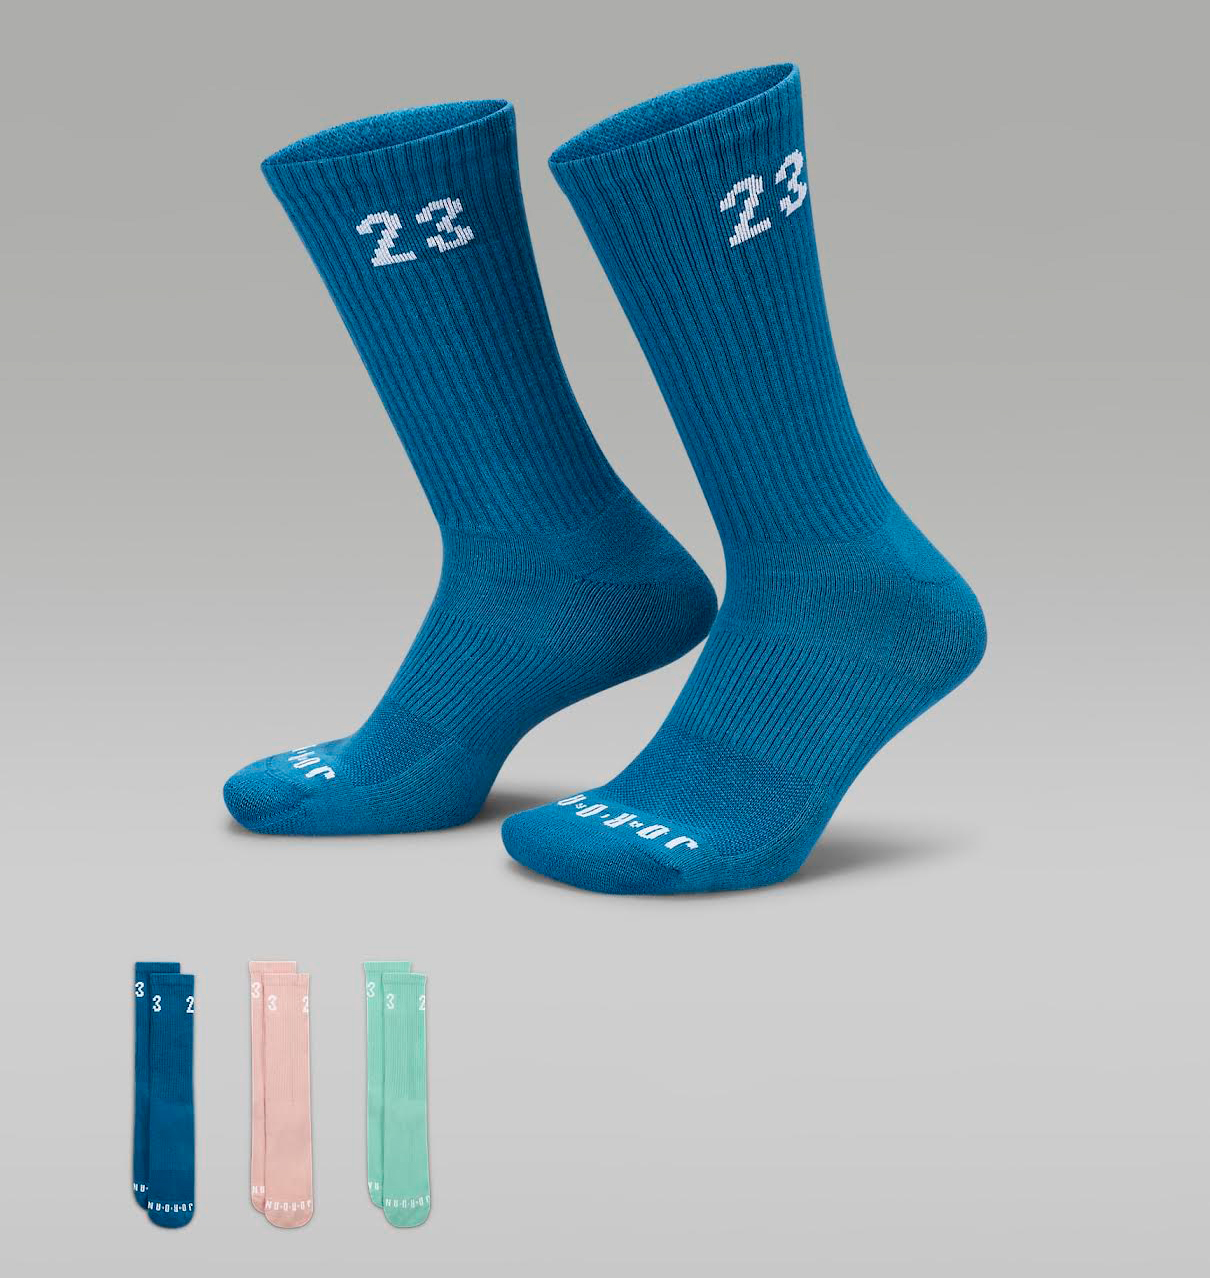 Jordan-Essentials-Crew-Socks-Industrial-Blue-Emerald-Mint-Pink